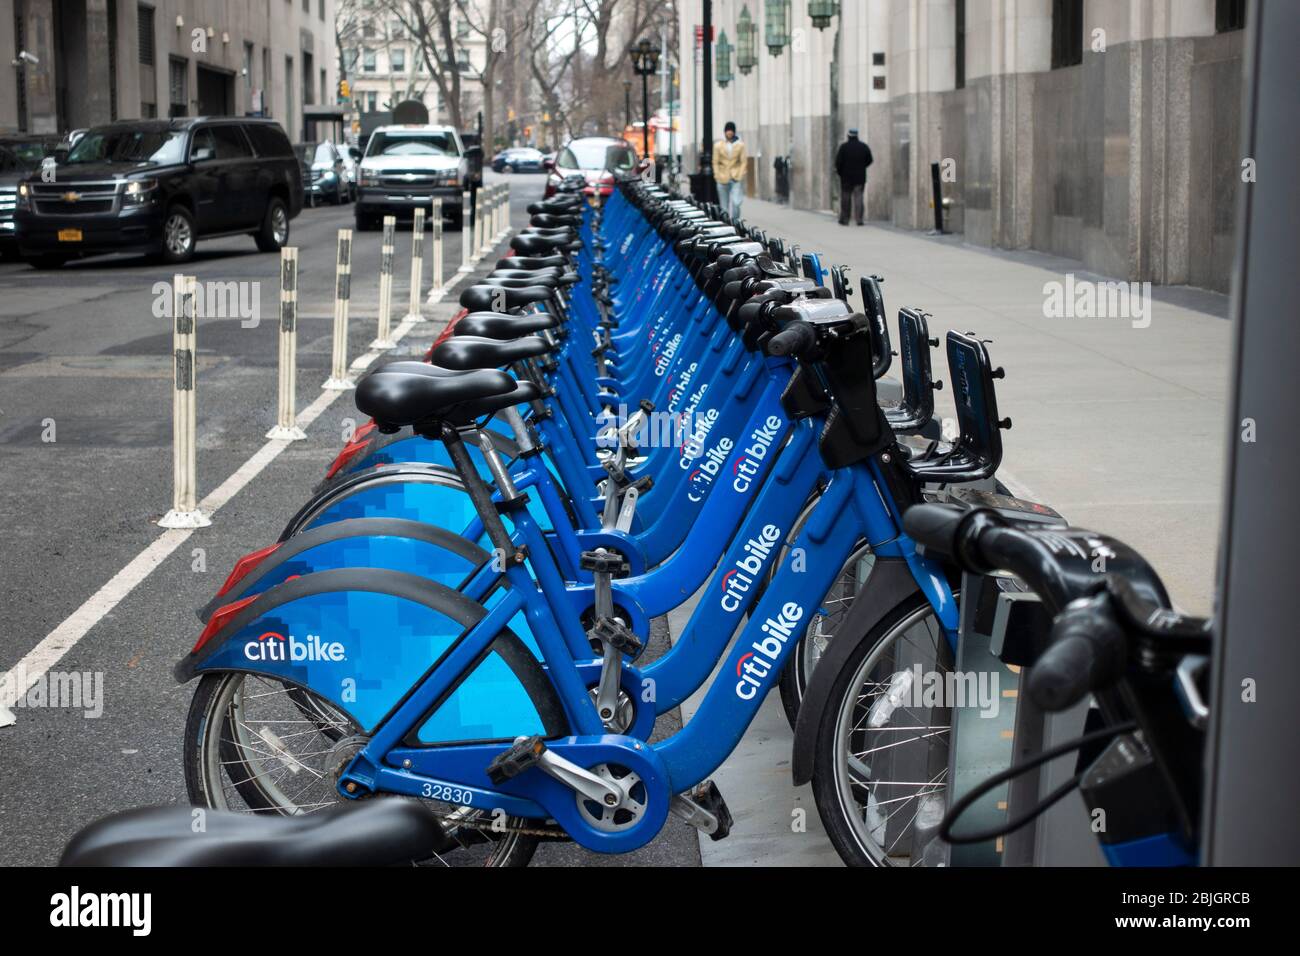 Row of blue rental Citi bikes on a Manhattan street ready for hire Stock Photo